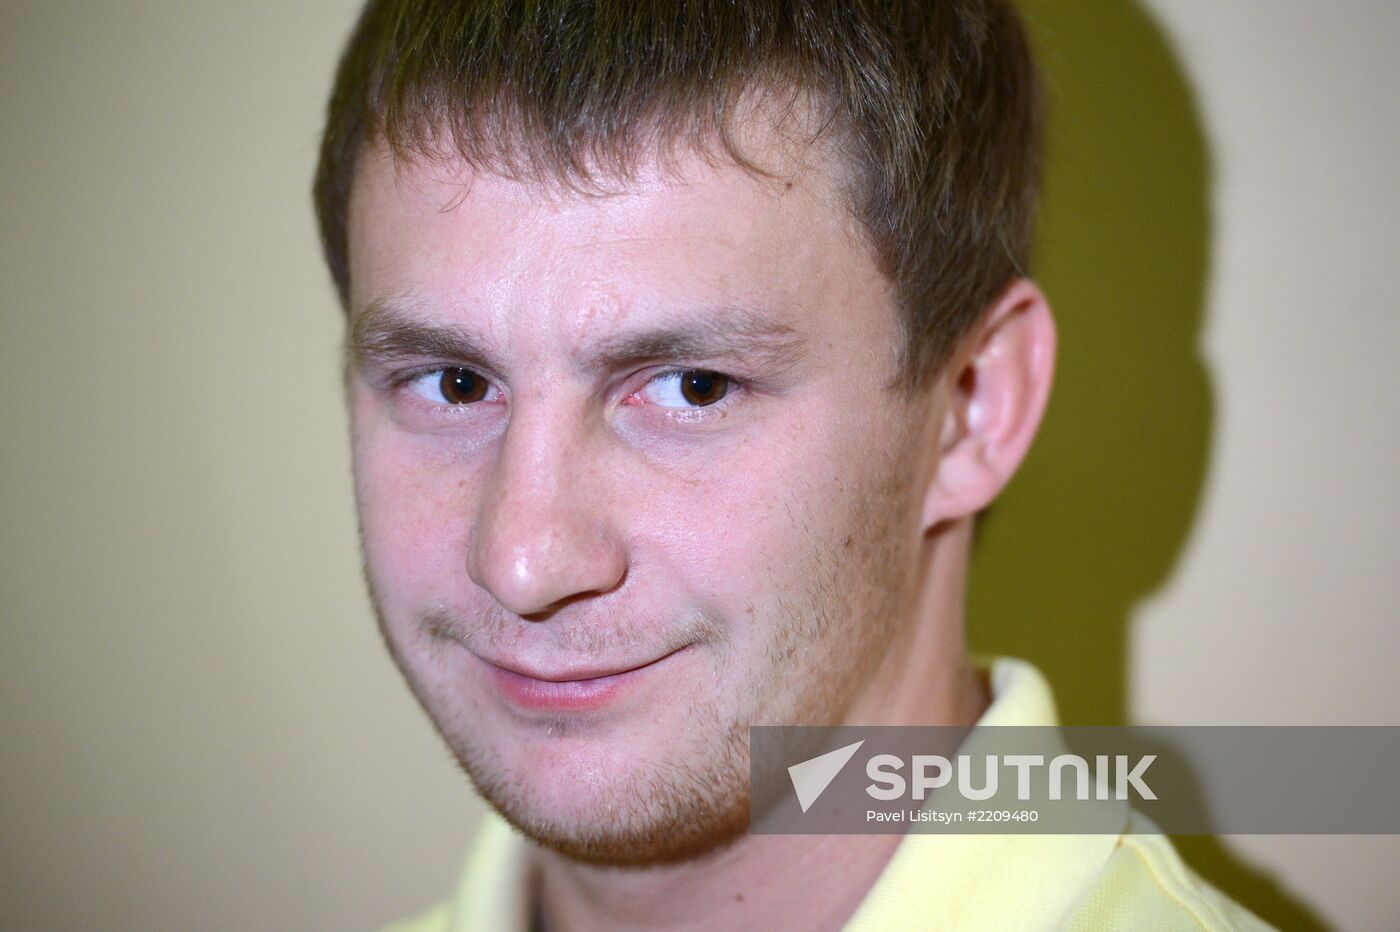 Sentence announced in Valery Tretyakov's case